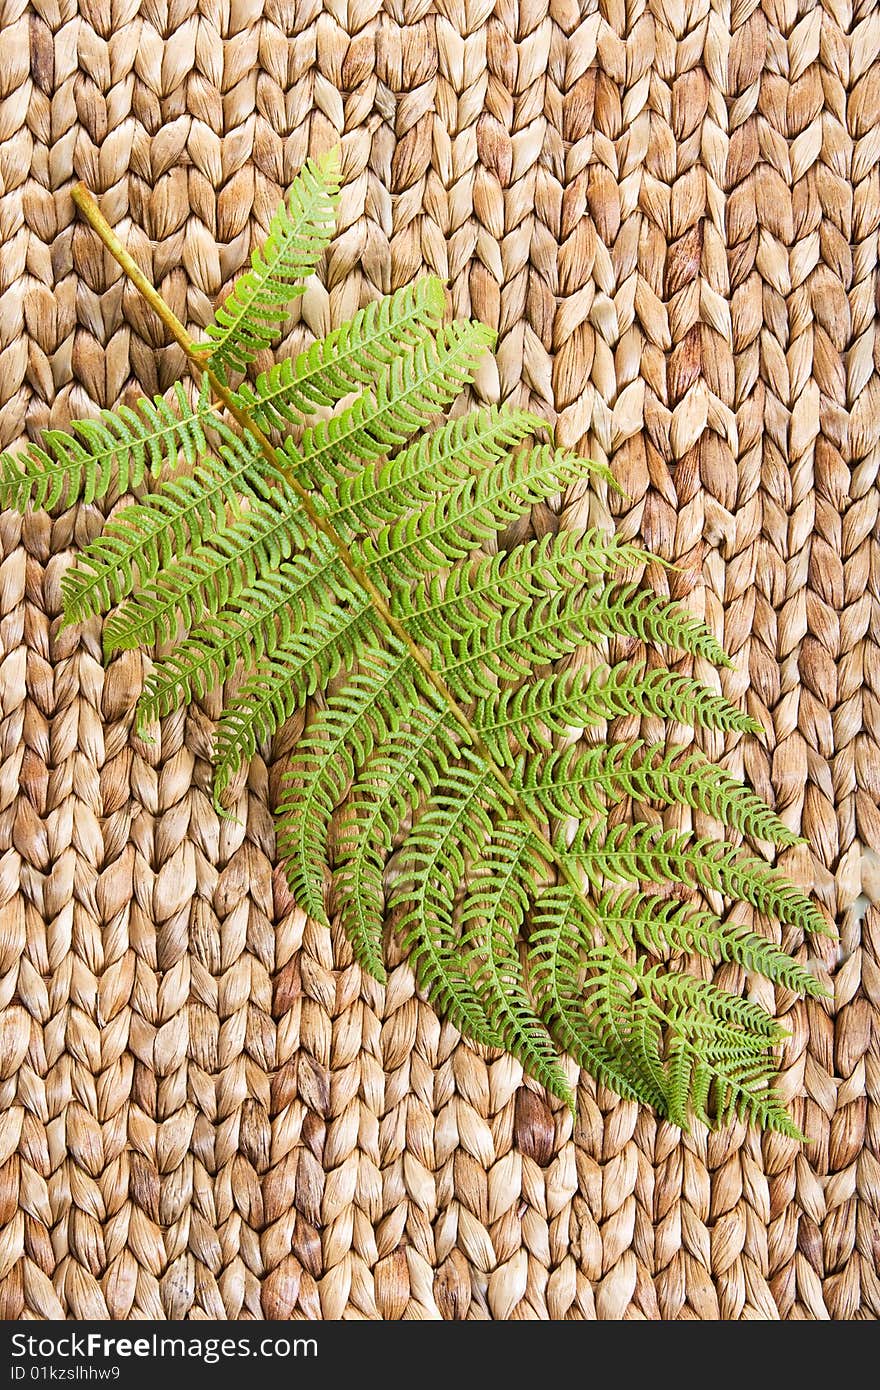 Fern leaf on a grass mat shot at a day spa